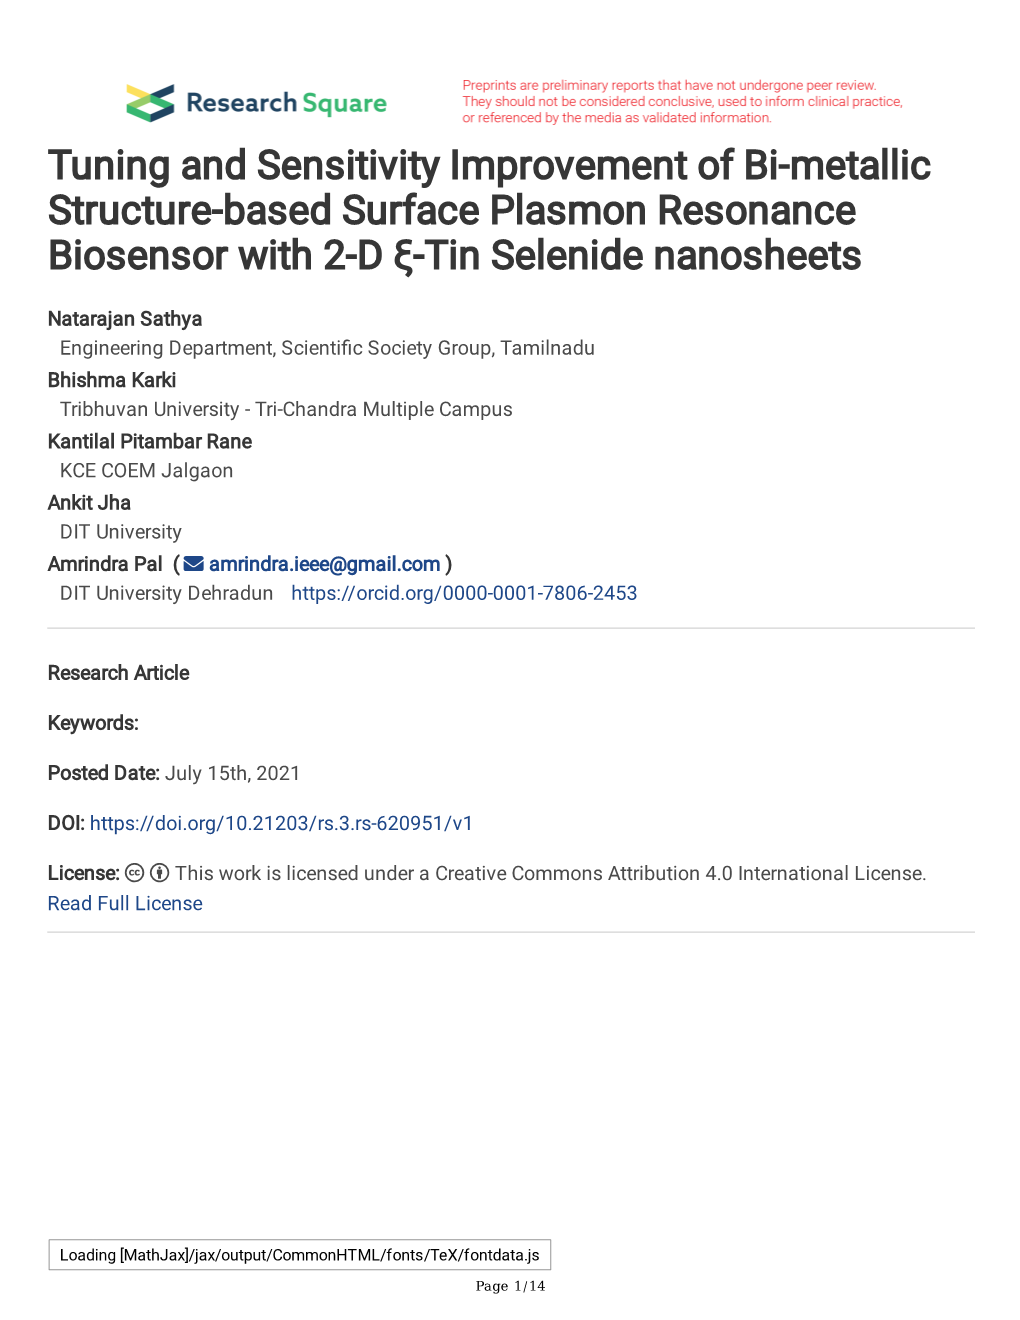 Tuning and Sensitivity Improvement of Bi-Metallic Structure-Based Surface Plasmon Resonance Biosensor with 2-D Ξ-Tin Selenide Nanosheets